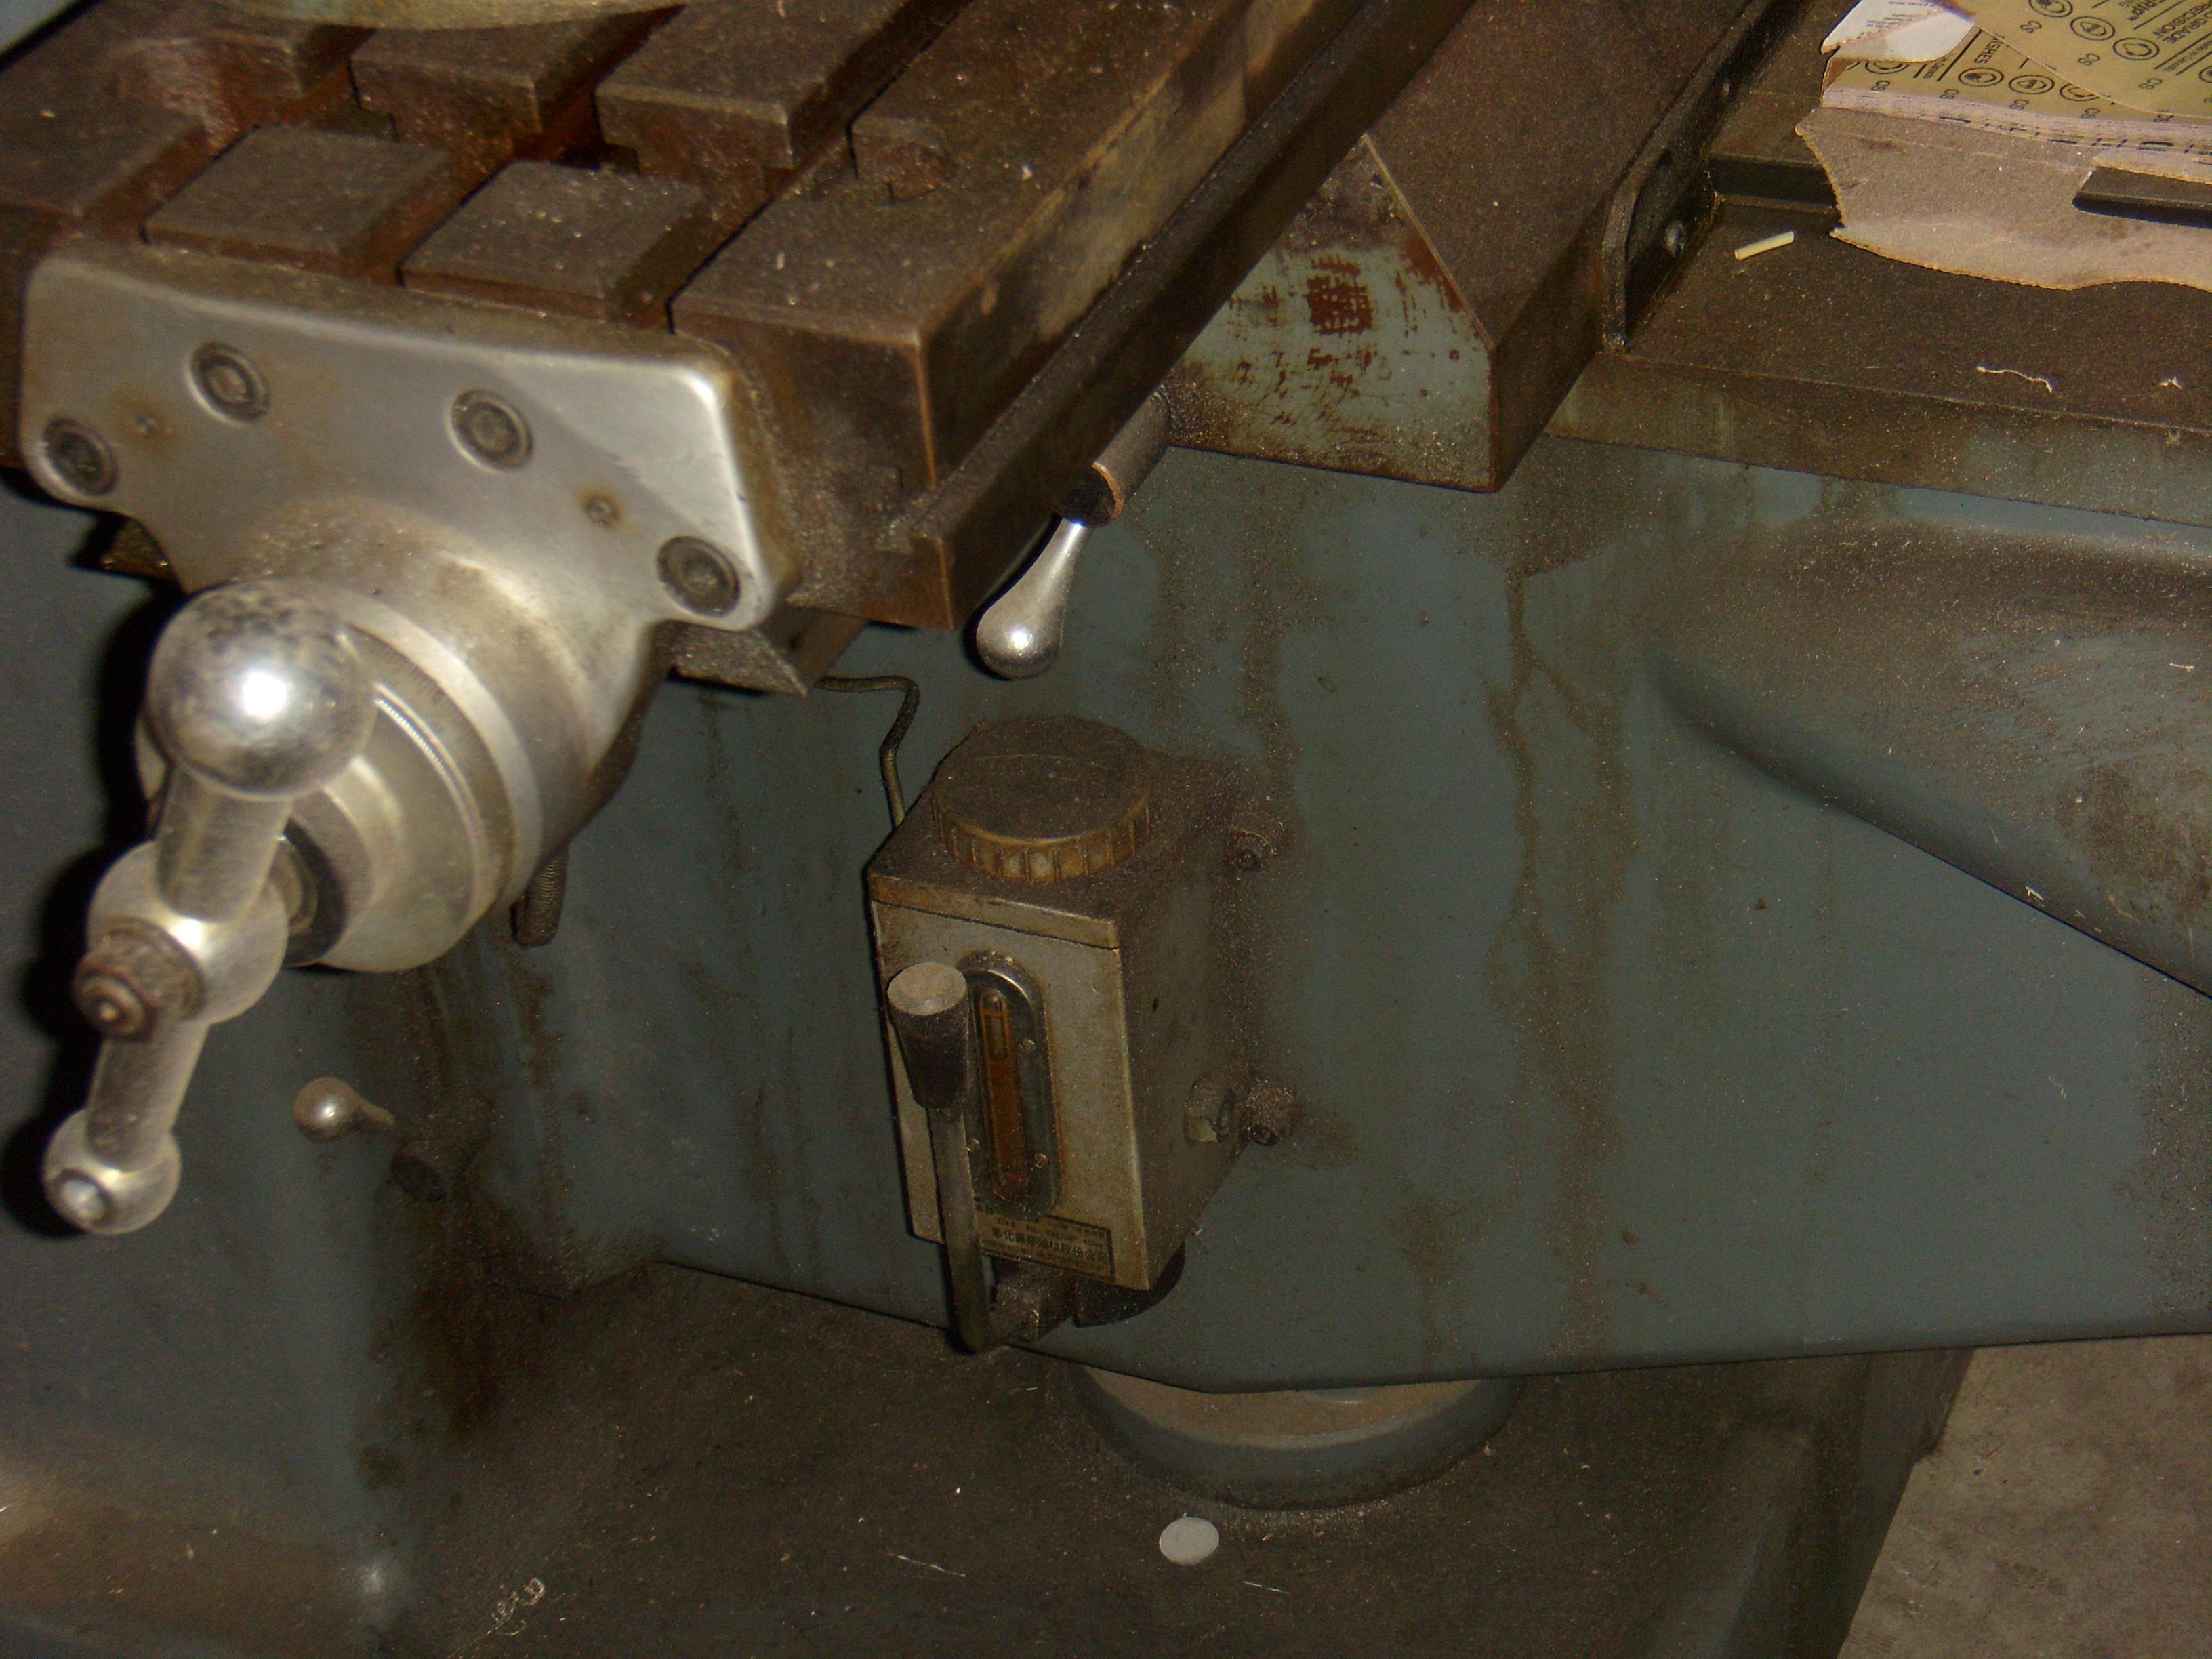 Spl south bend turret mill milling machine